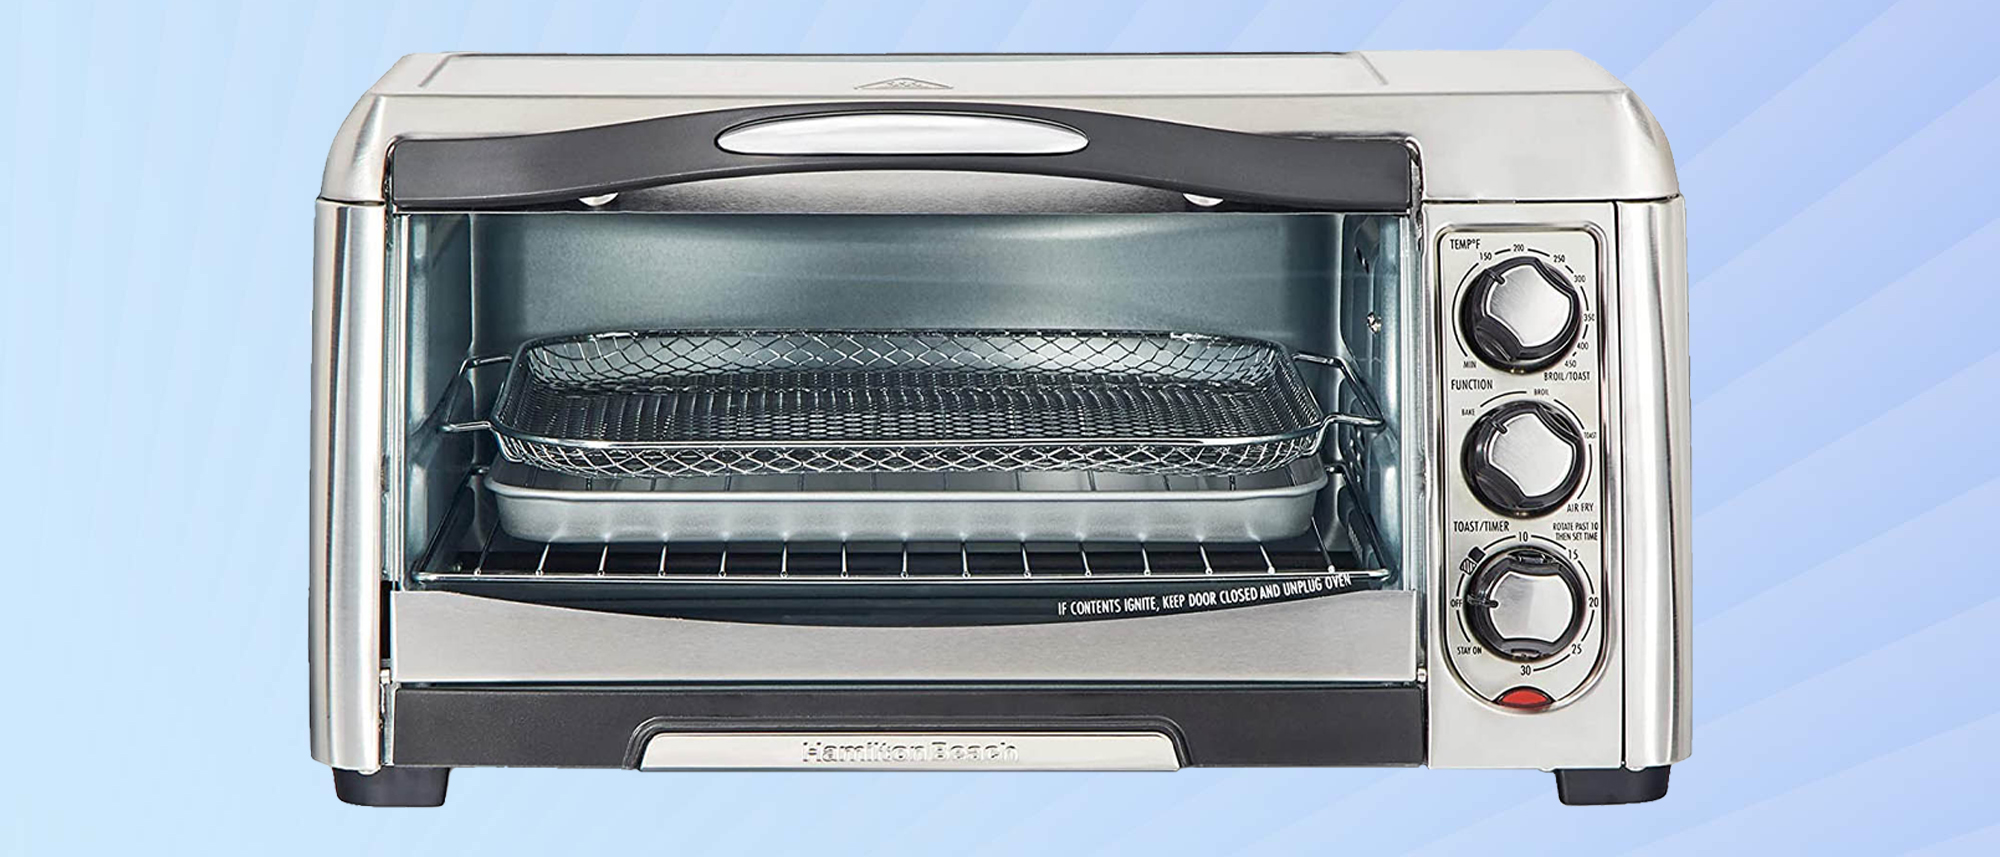 Hamilton Beach Air Fryer Sure Crisp Toaster Oven review